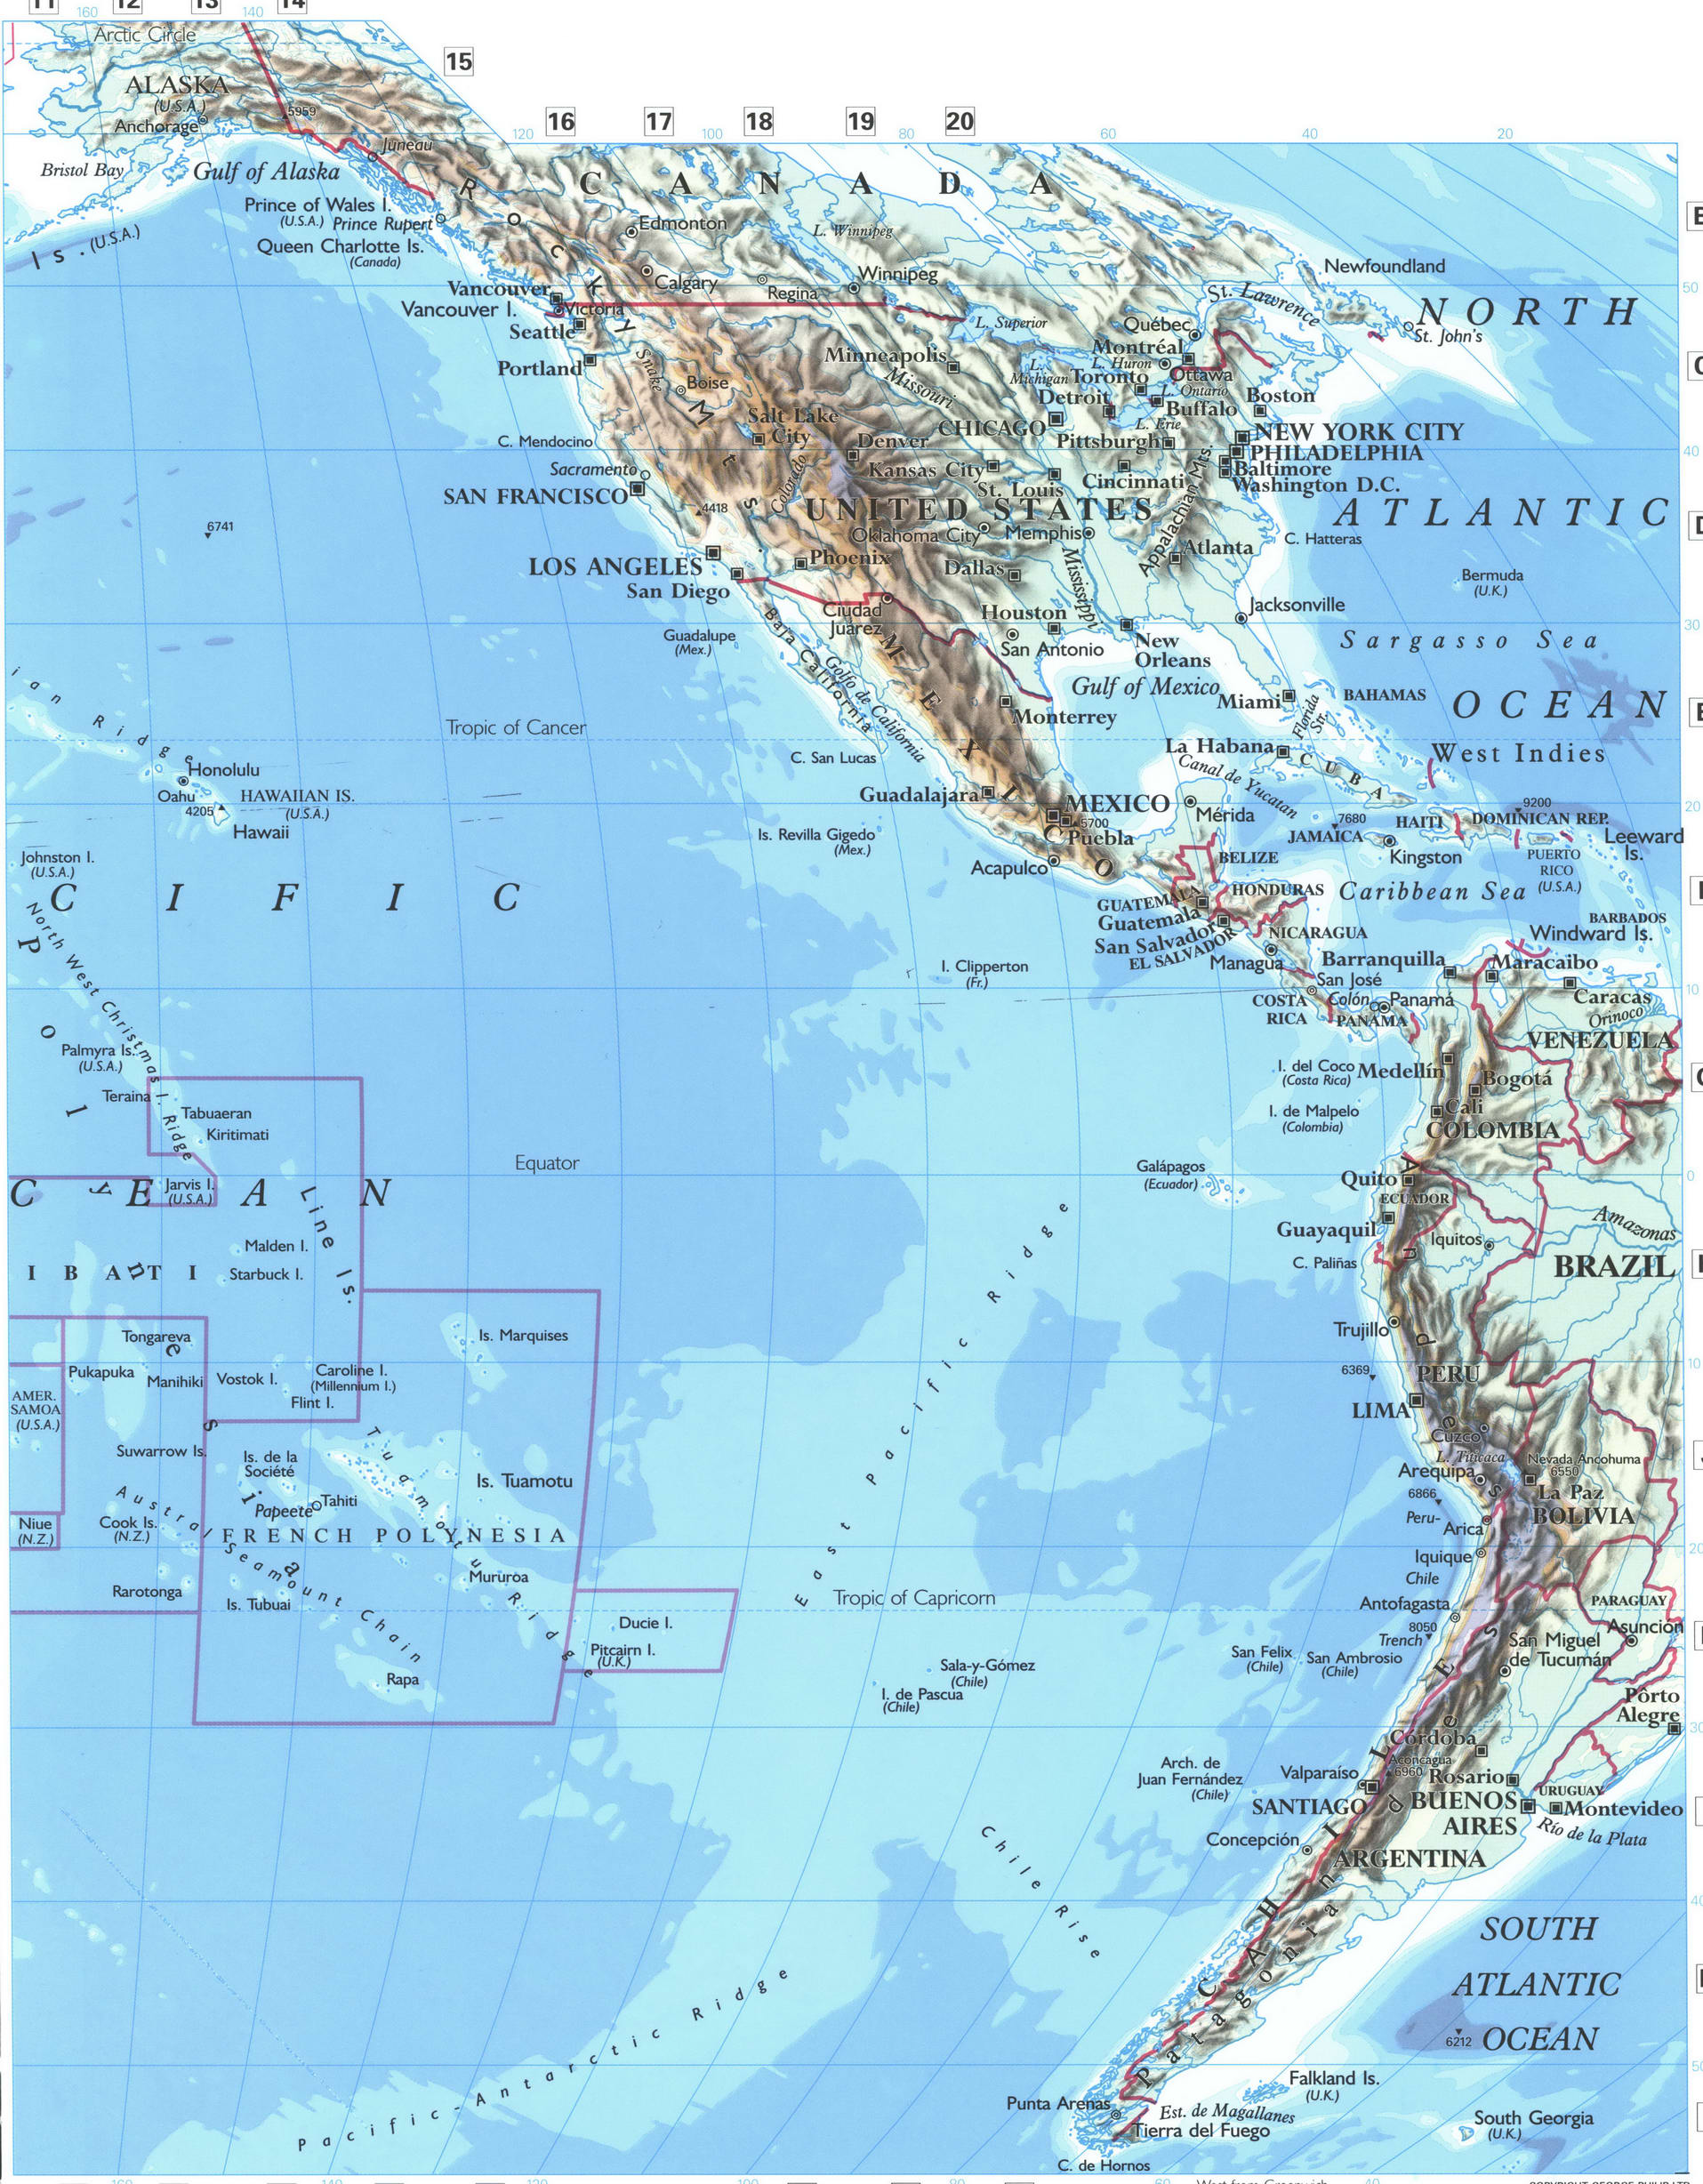 Pacific Ocean map - east part